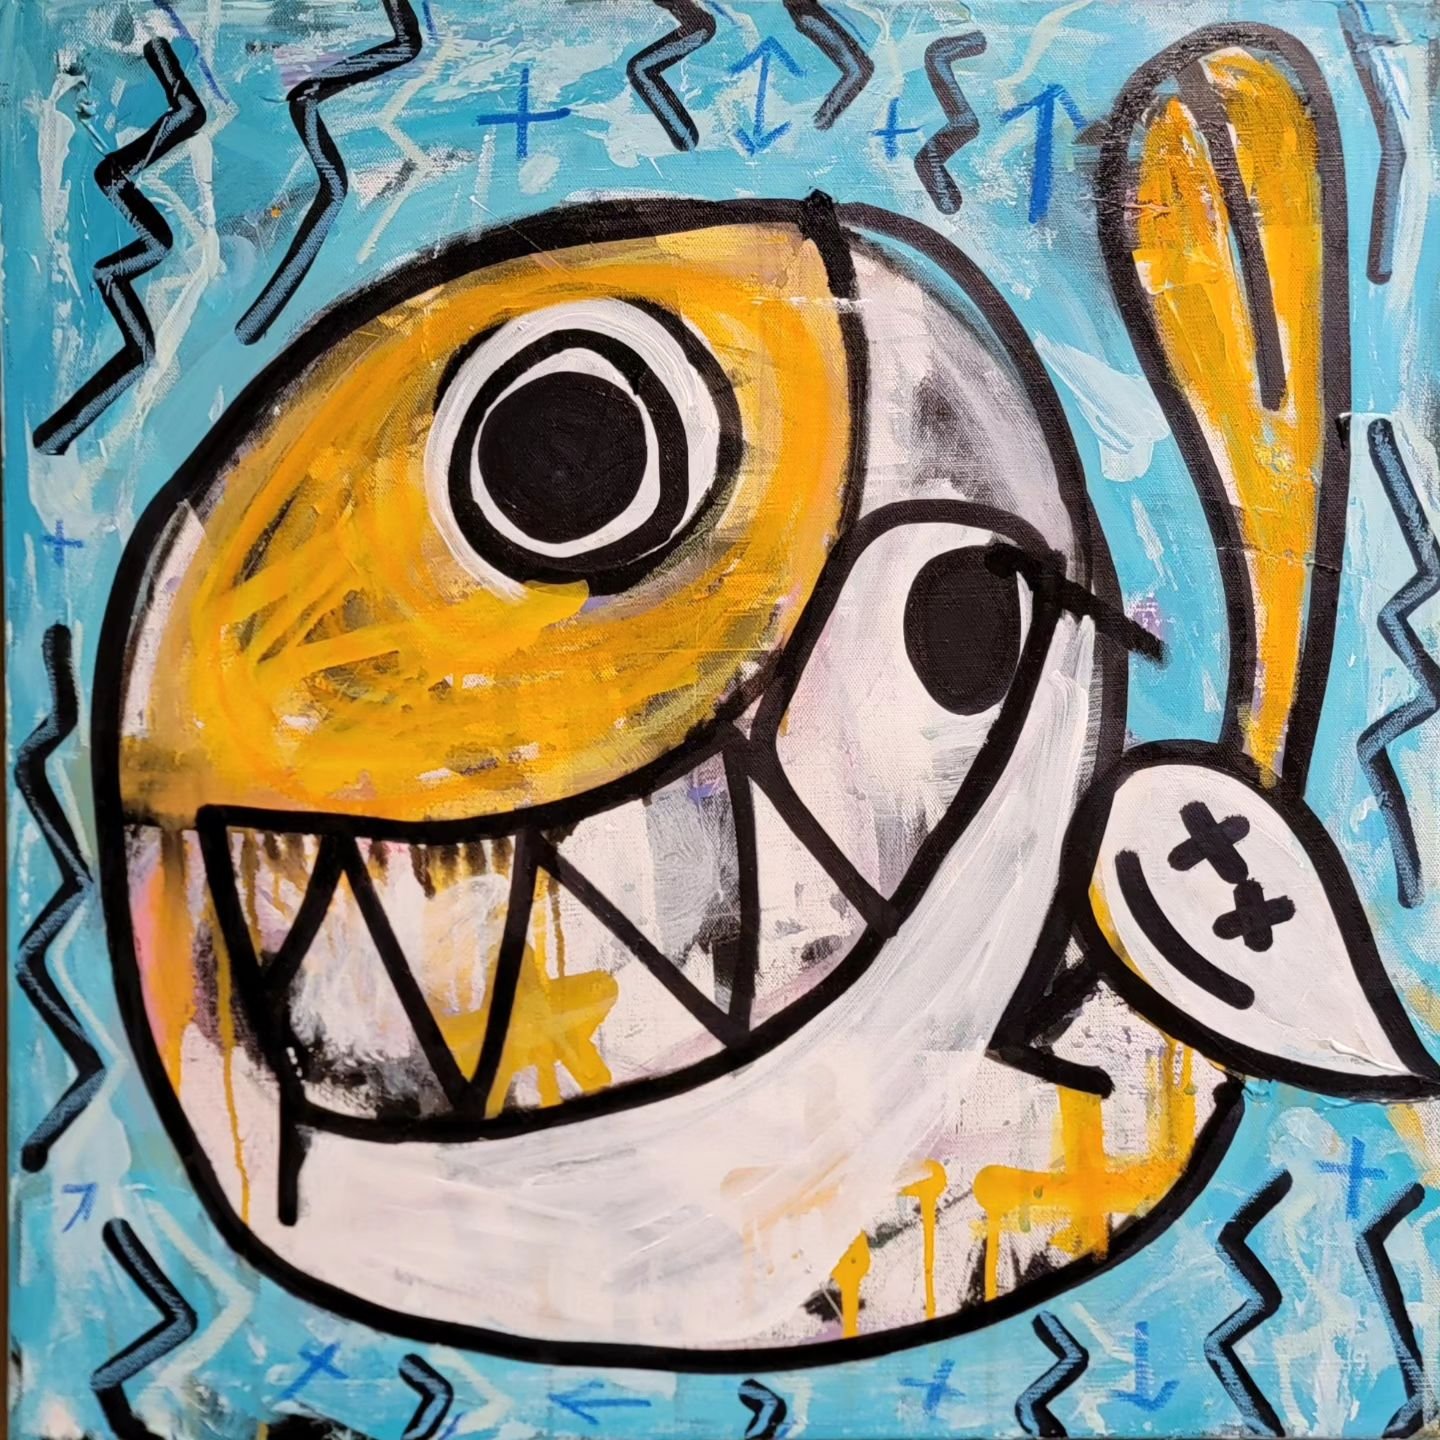 #Buddy
24x24 Acrylic and oil pastel on Canvas

#artoftheday #streetart #acryliconcanvas #loft #homedecor #jasonpikenart #abstract #abstractartist #fish #nyc #greenpoint #greenpointbrooklyn